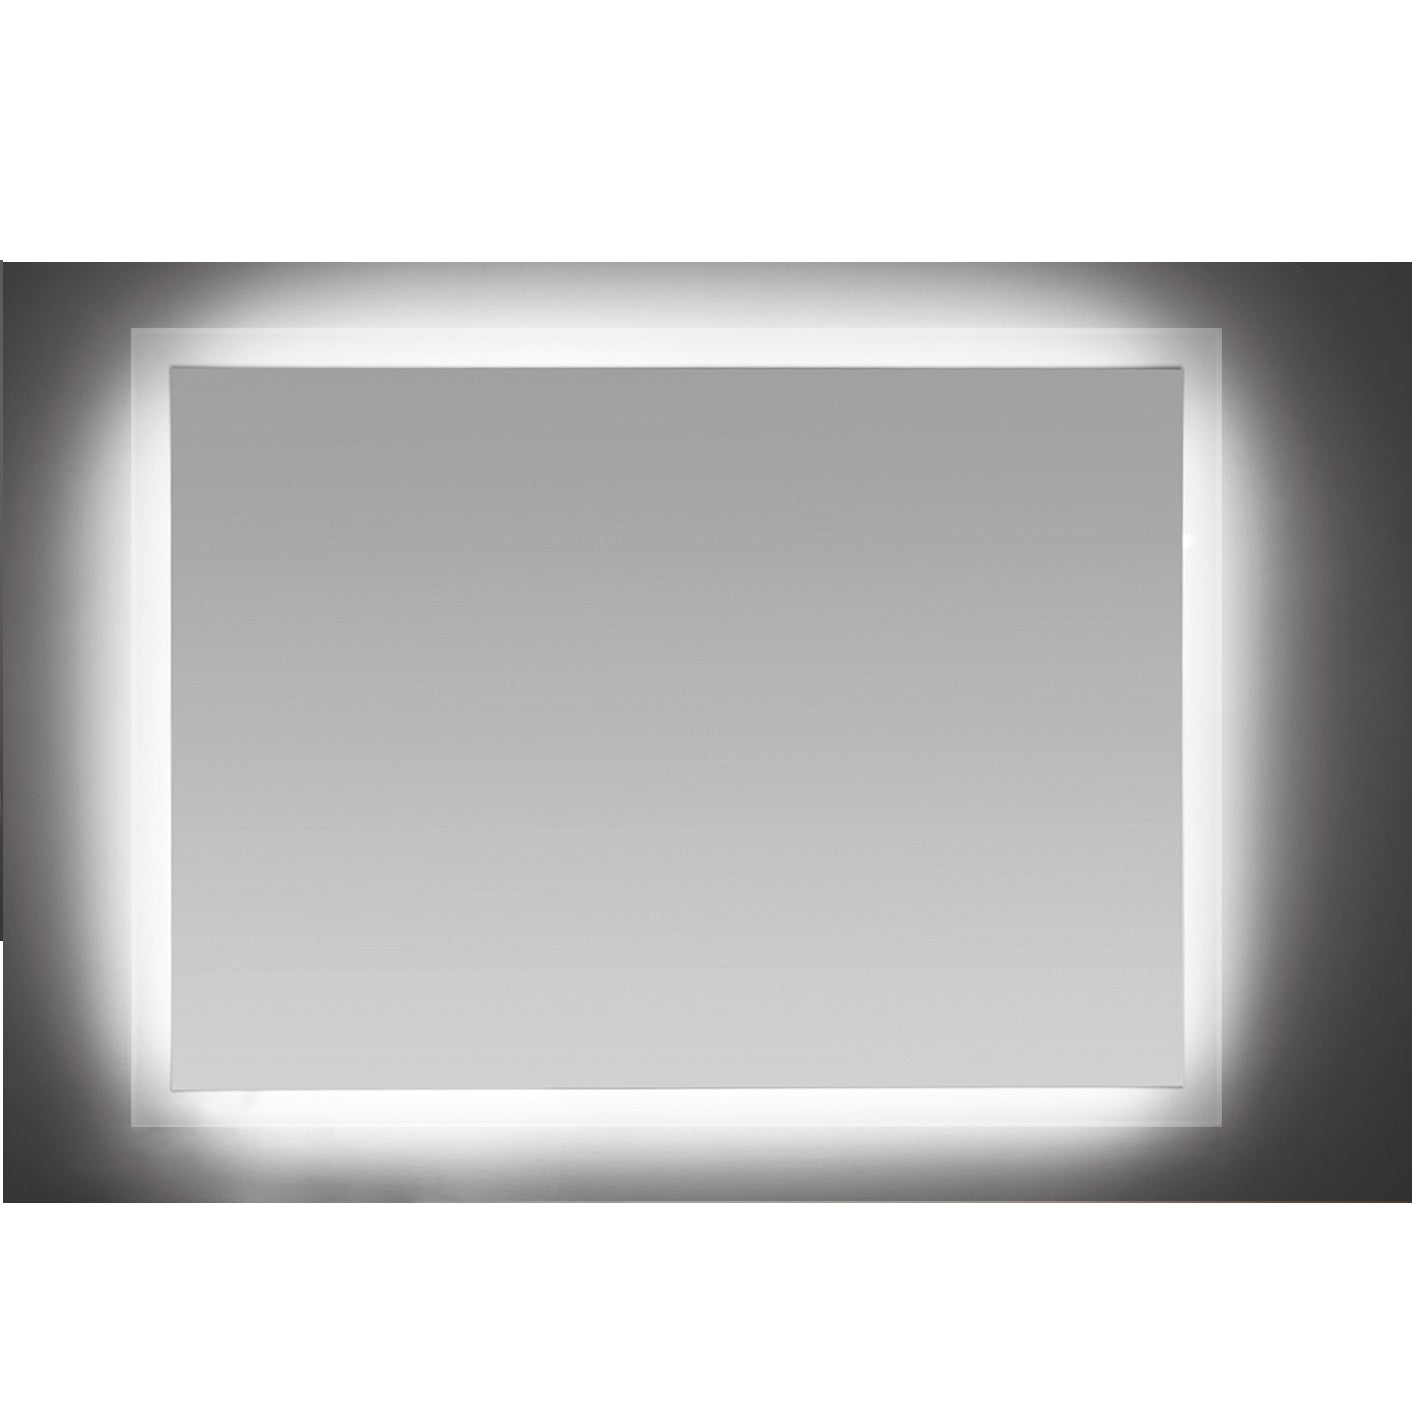 Square mirror with LED Light (900mm * 700mm) - MIRO LUNA907